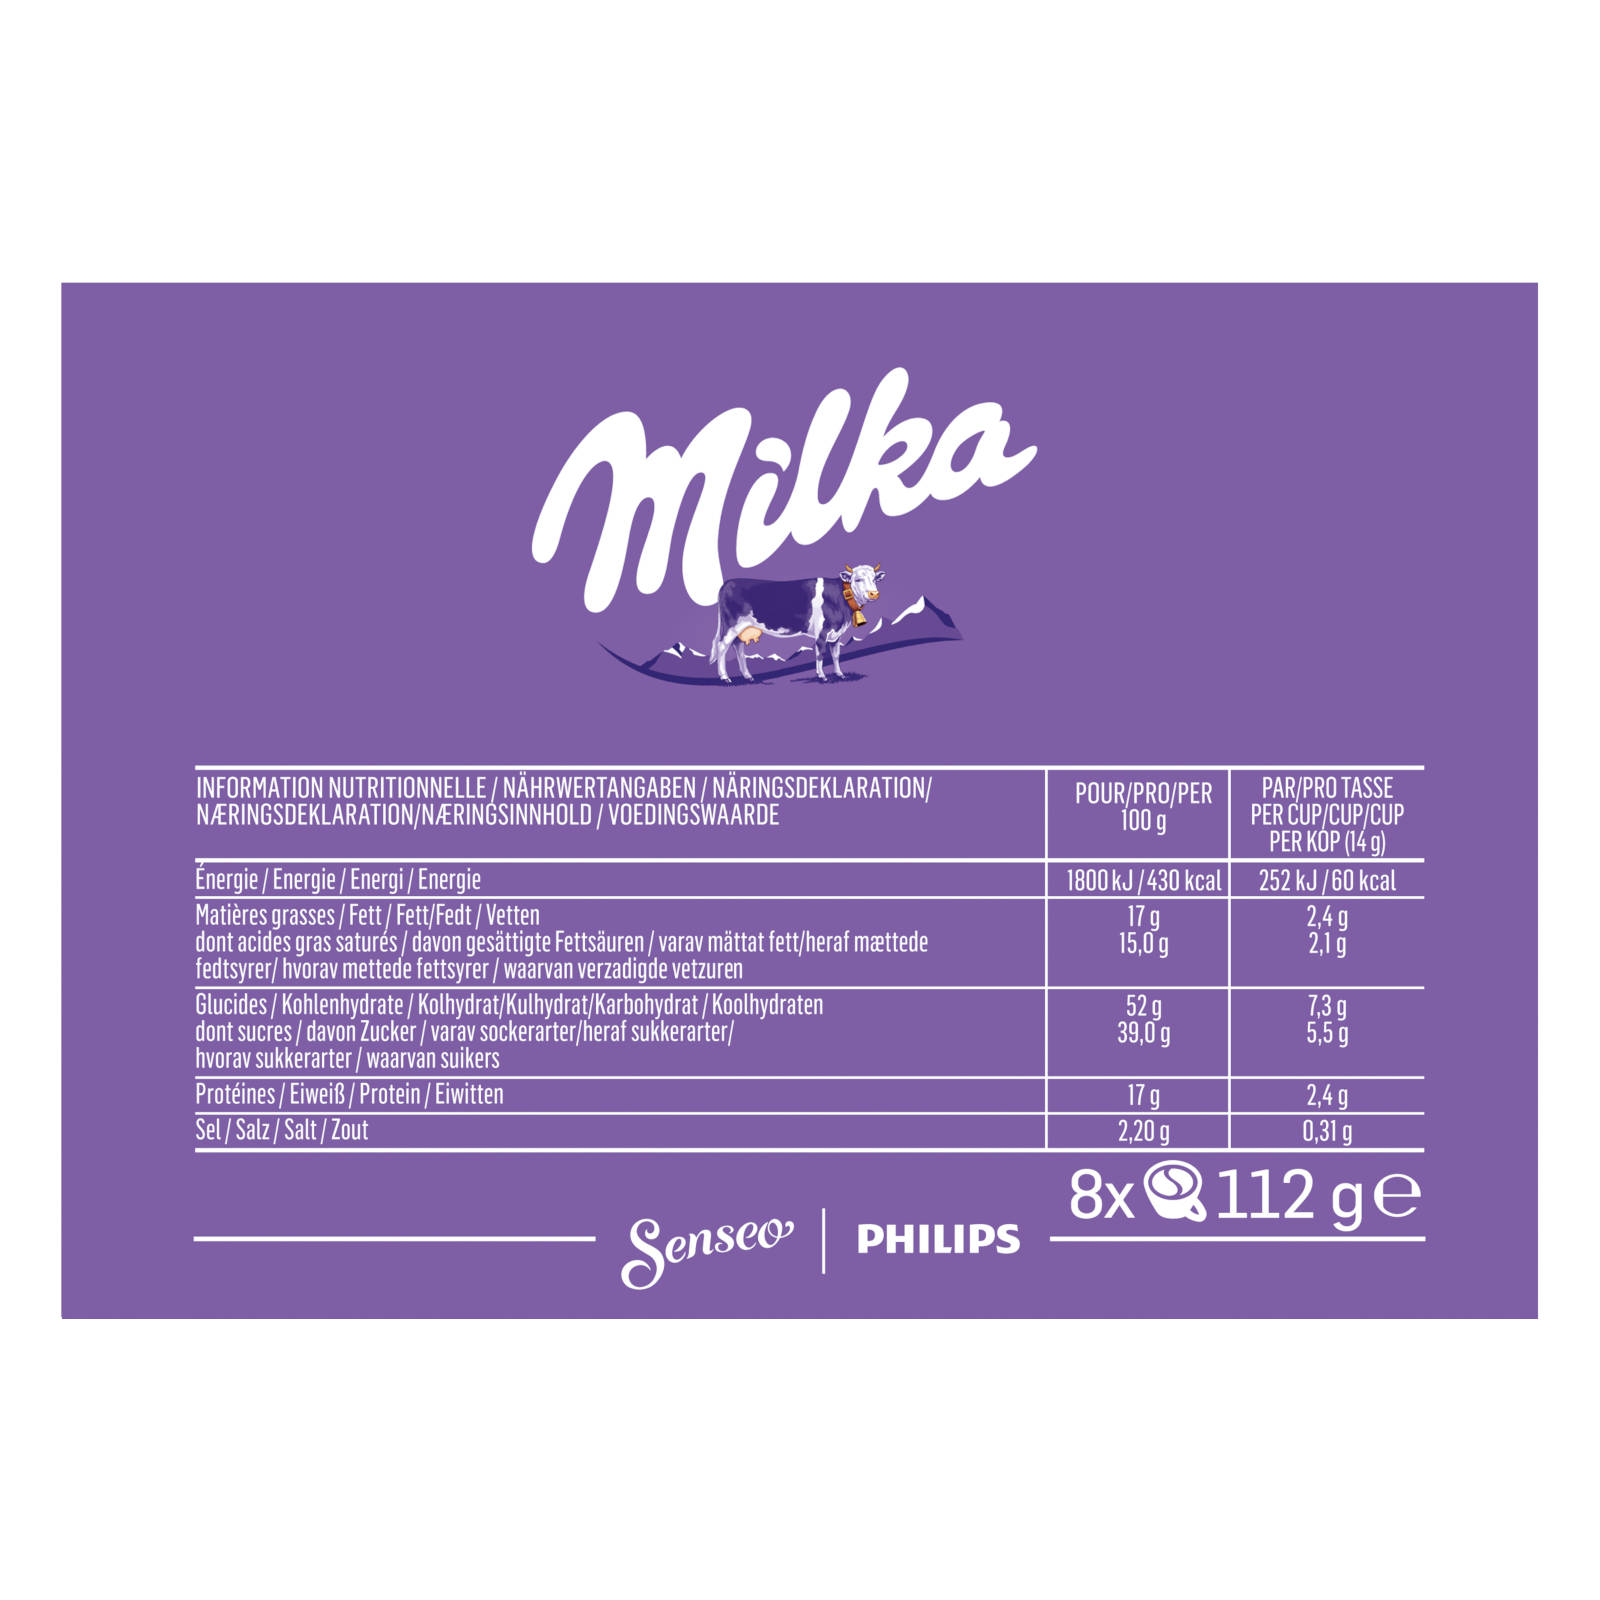 SENSEO Milka Kakao heisse Pad-Maschine) Soft- 80 Getränke Schokolade Kakaopads Choco (Senseo Hot